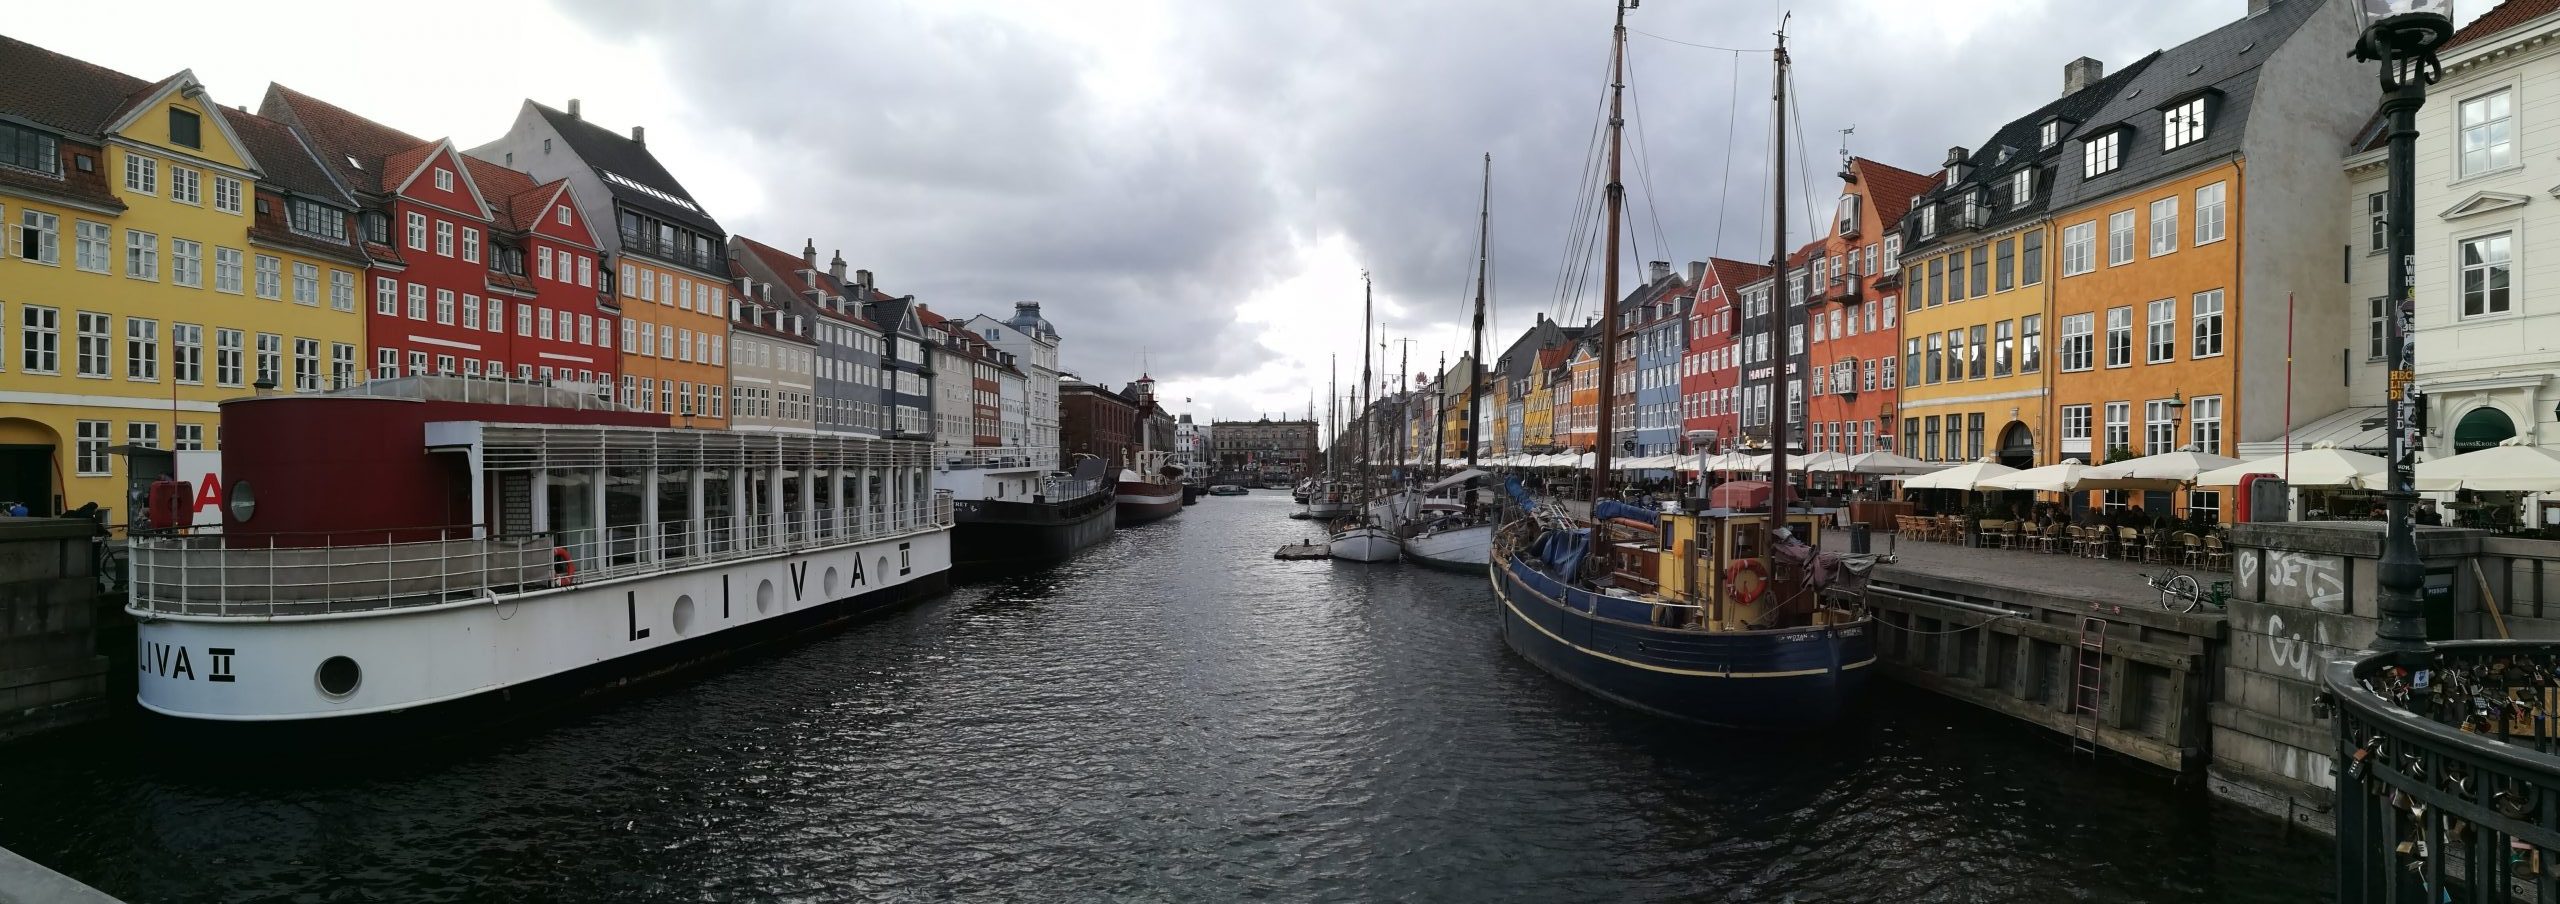 Nyhavn old harbour of Denmark